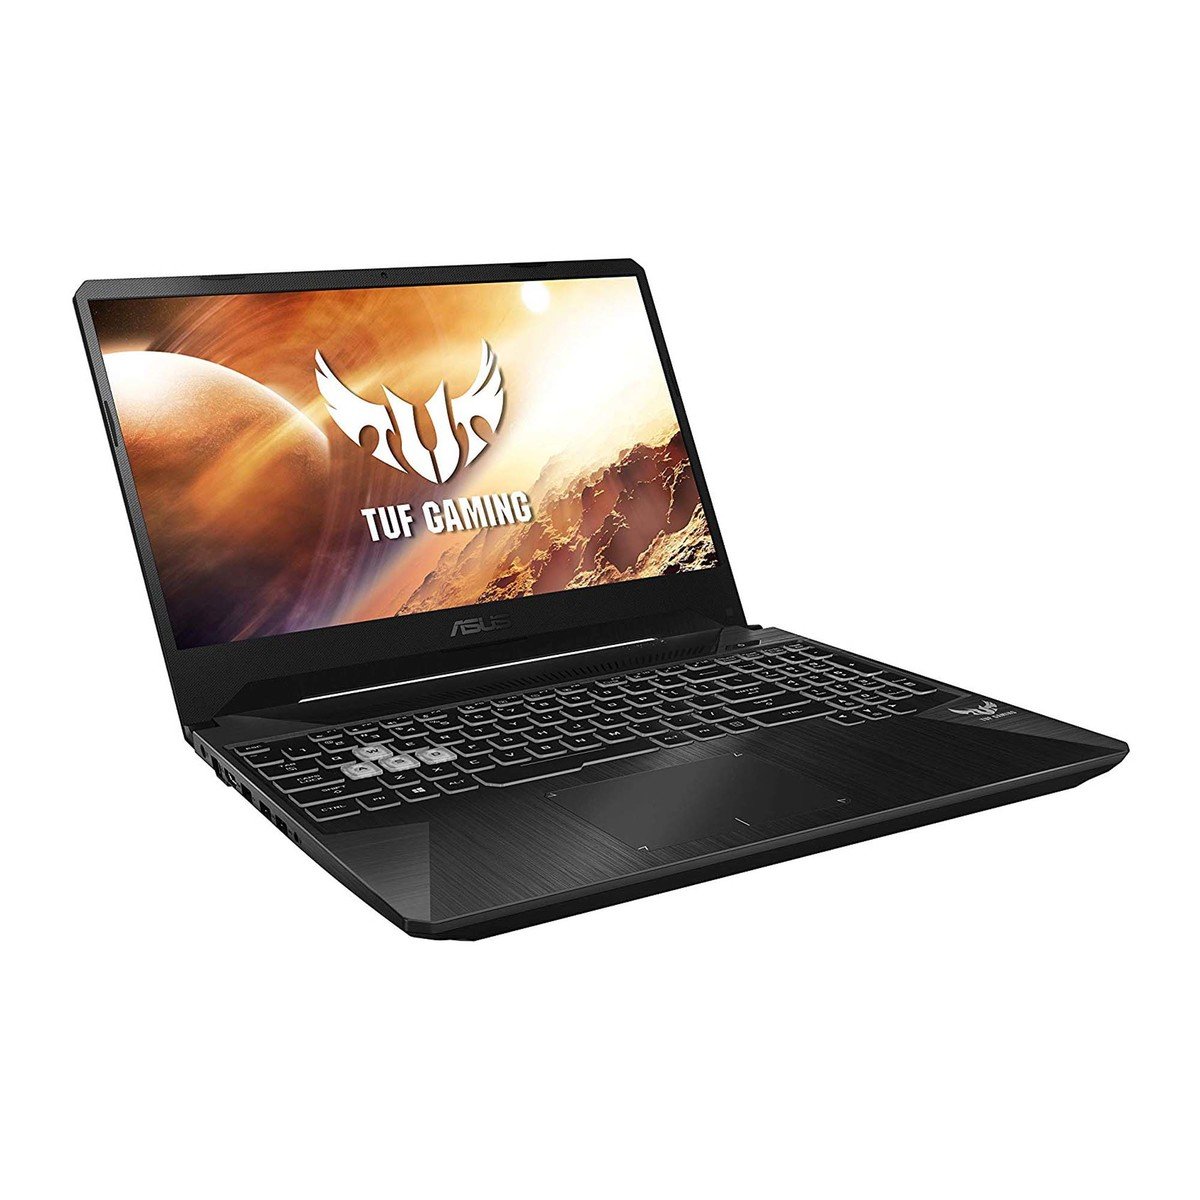 Asus TUF Gaming FX505DV-AL110T TUF Gaming Laptop (Black)AMD R7-3750H 2.3GHz, 16 GB RAM, 1TB HDD + 512GB SSD, Nvidia GeForce RTX 2060, 15.6inches ,Windows 10, Eng-Arb-KB